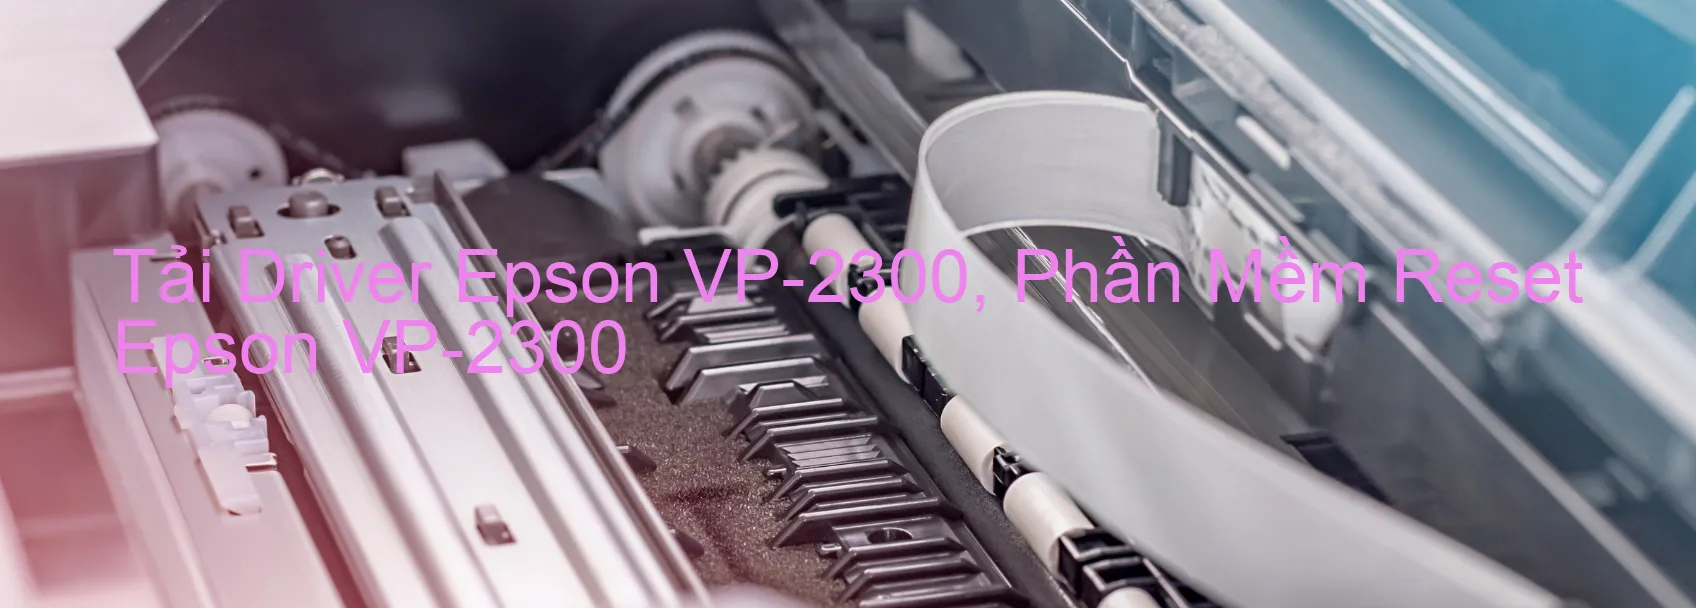 Driver Epson VP-2300, Phần Mềm Reset Epson VP-2300